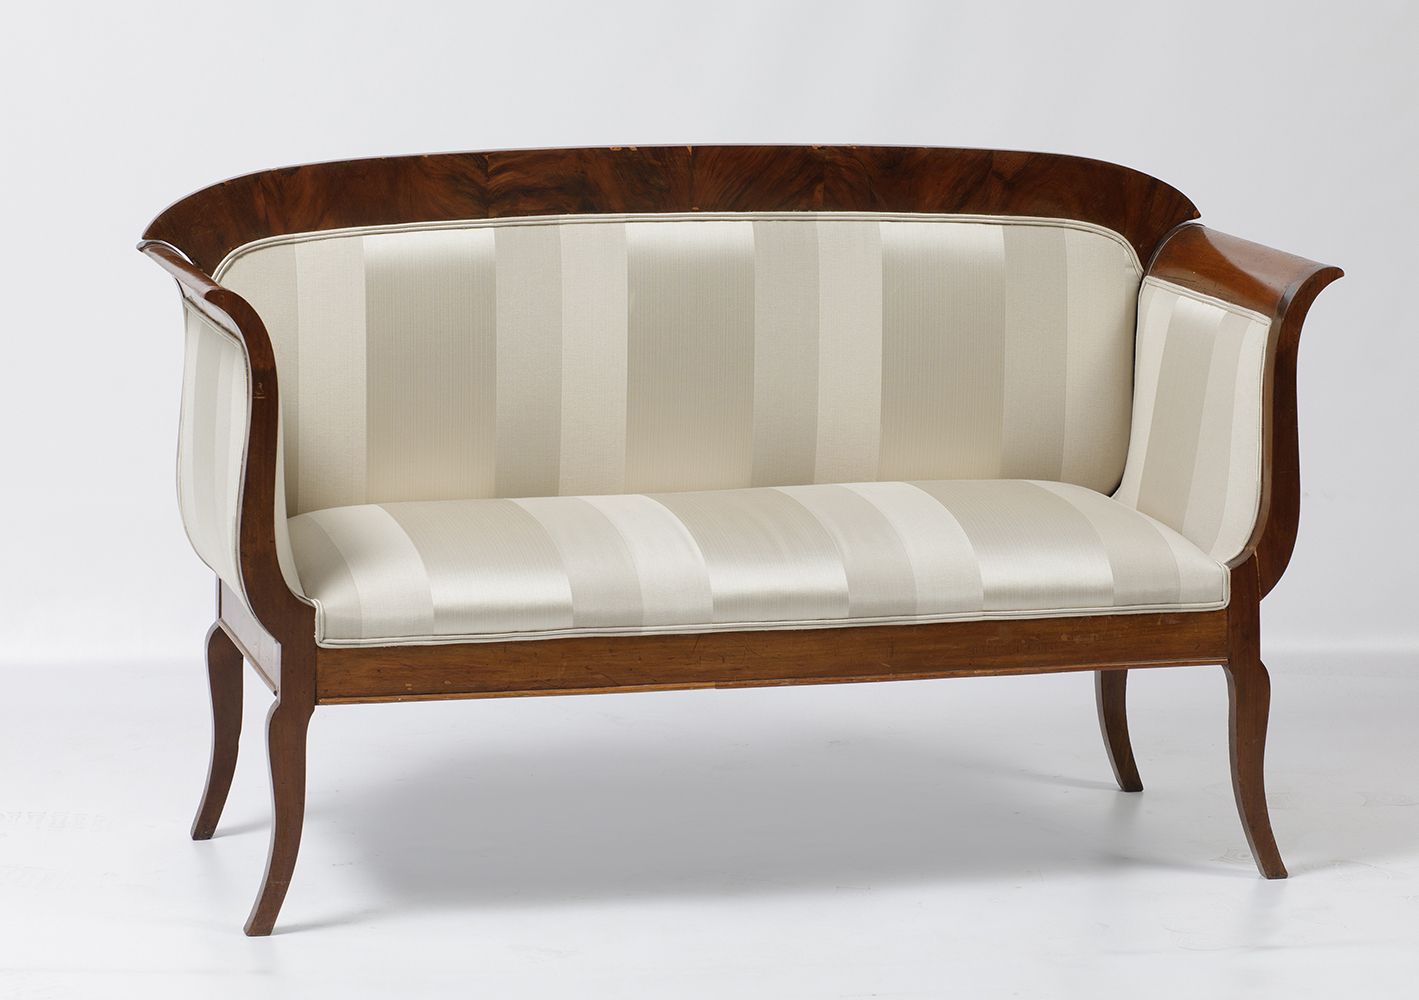 Sofa in mahogany palm English sofa S.XIX in mahogany wood. . 92 x 15 x 54 cm.